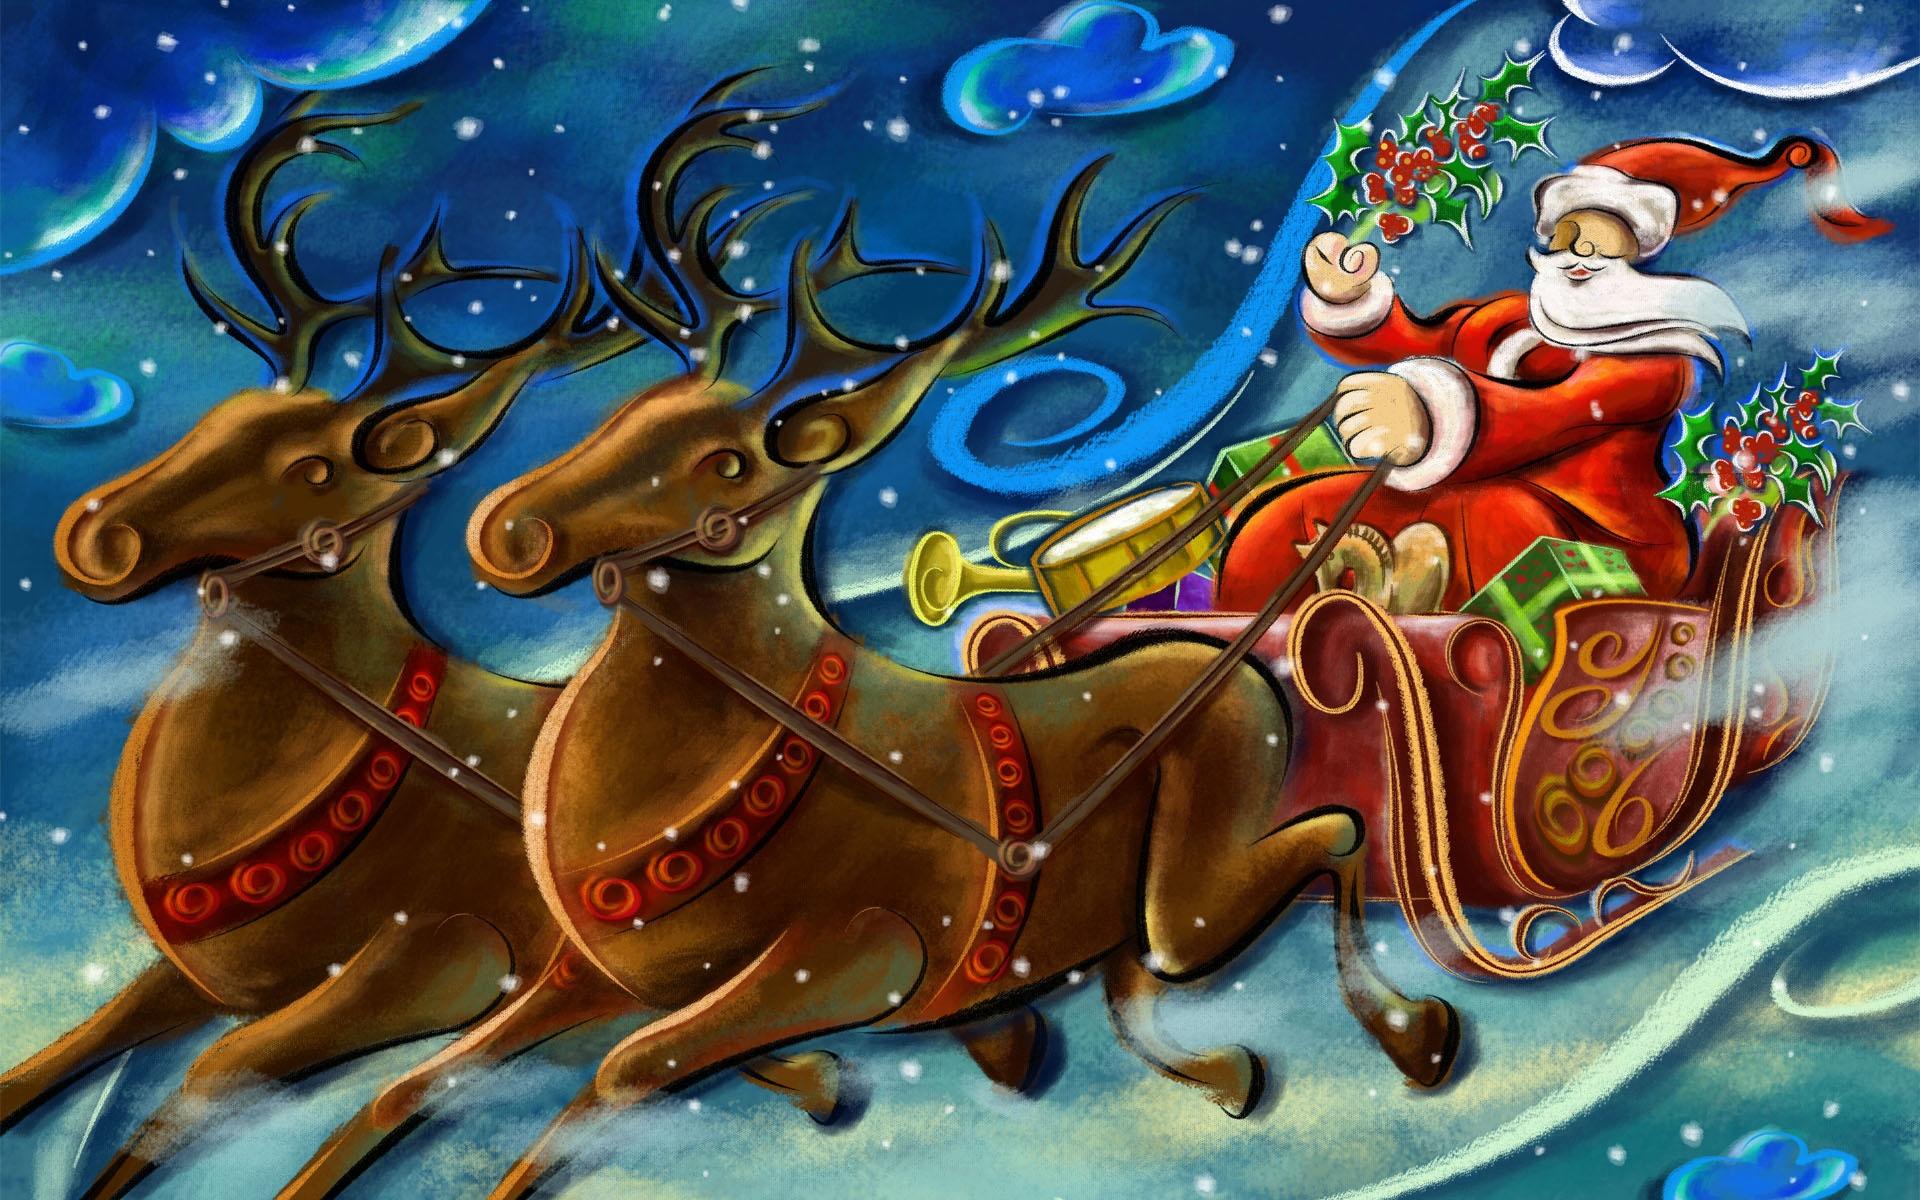 Santa Clause Creative Art Work Wallpaper in jpg format for free